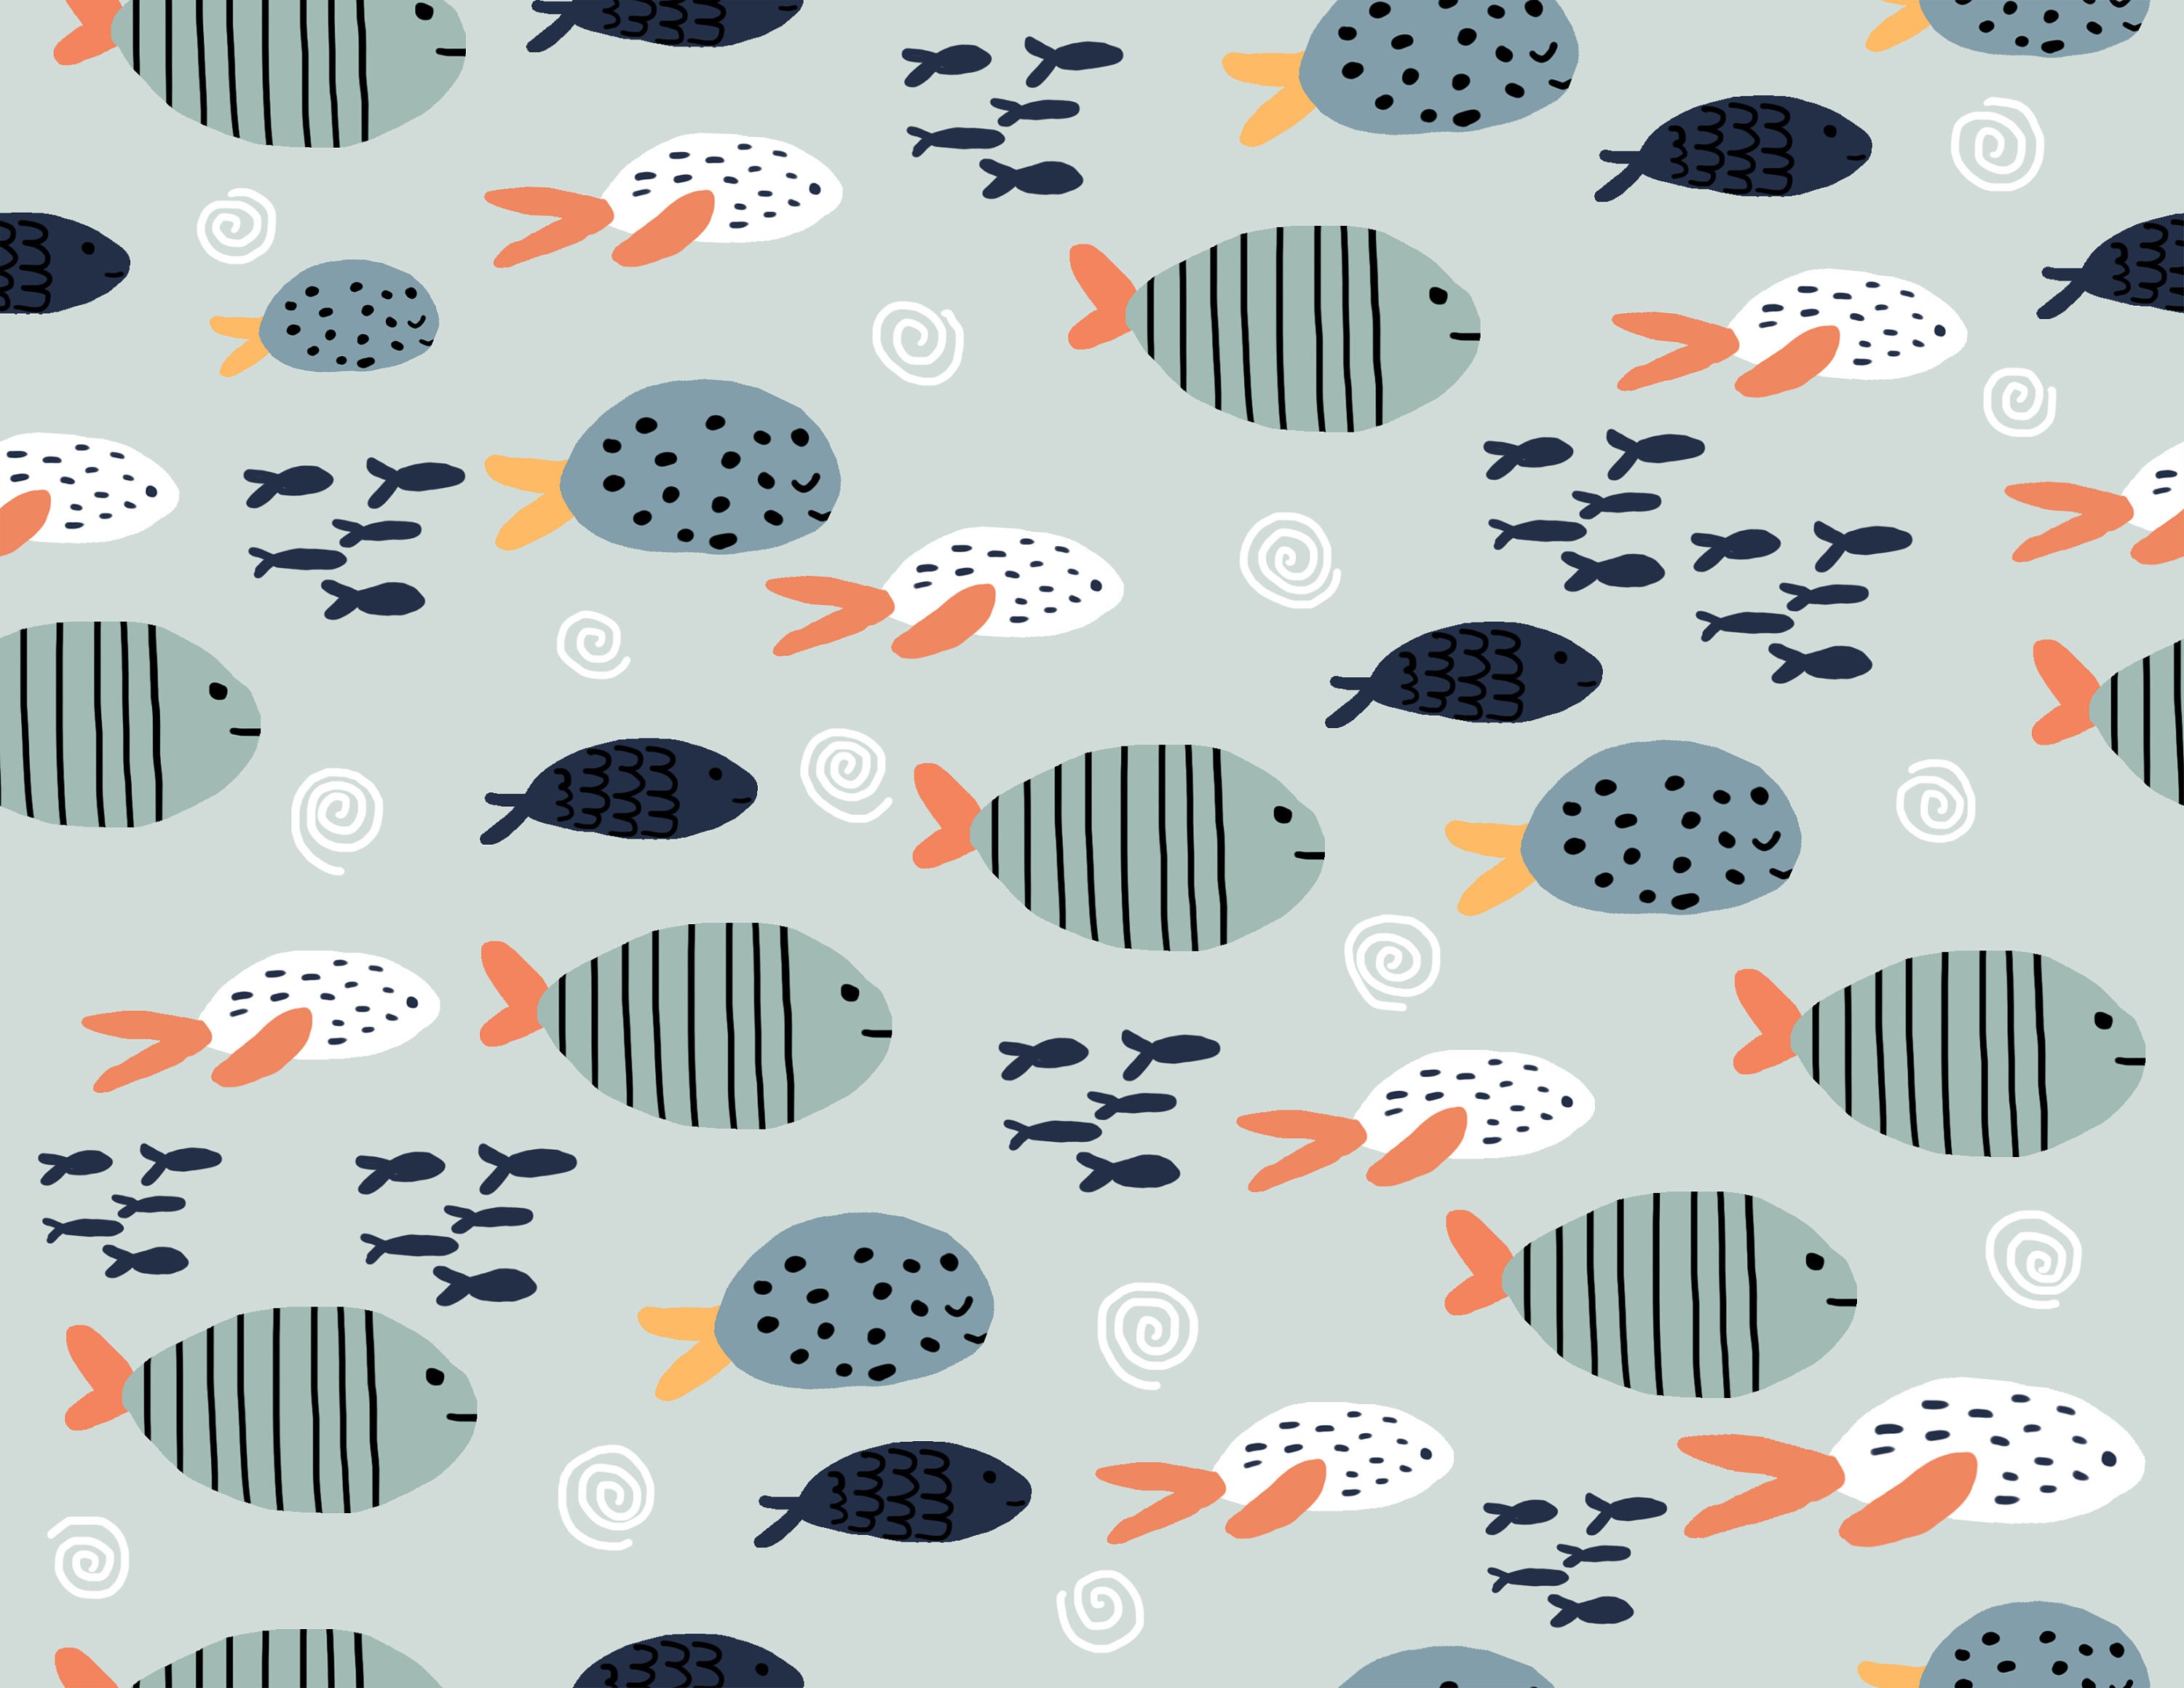 Fish Fleece Fabric 